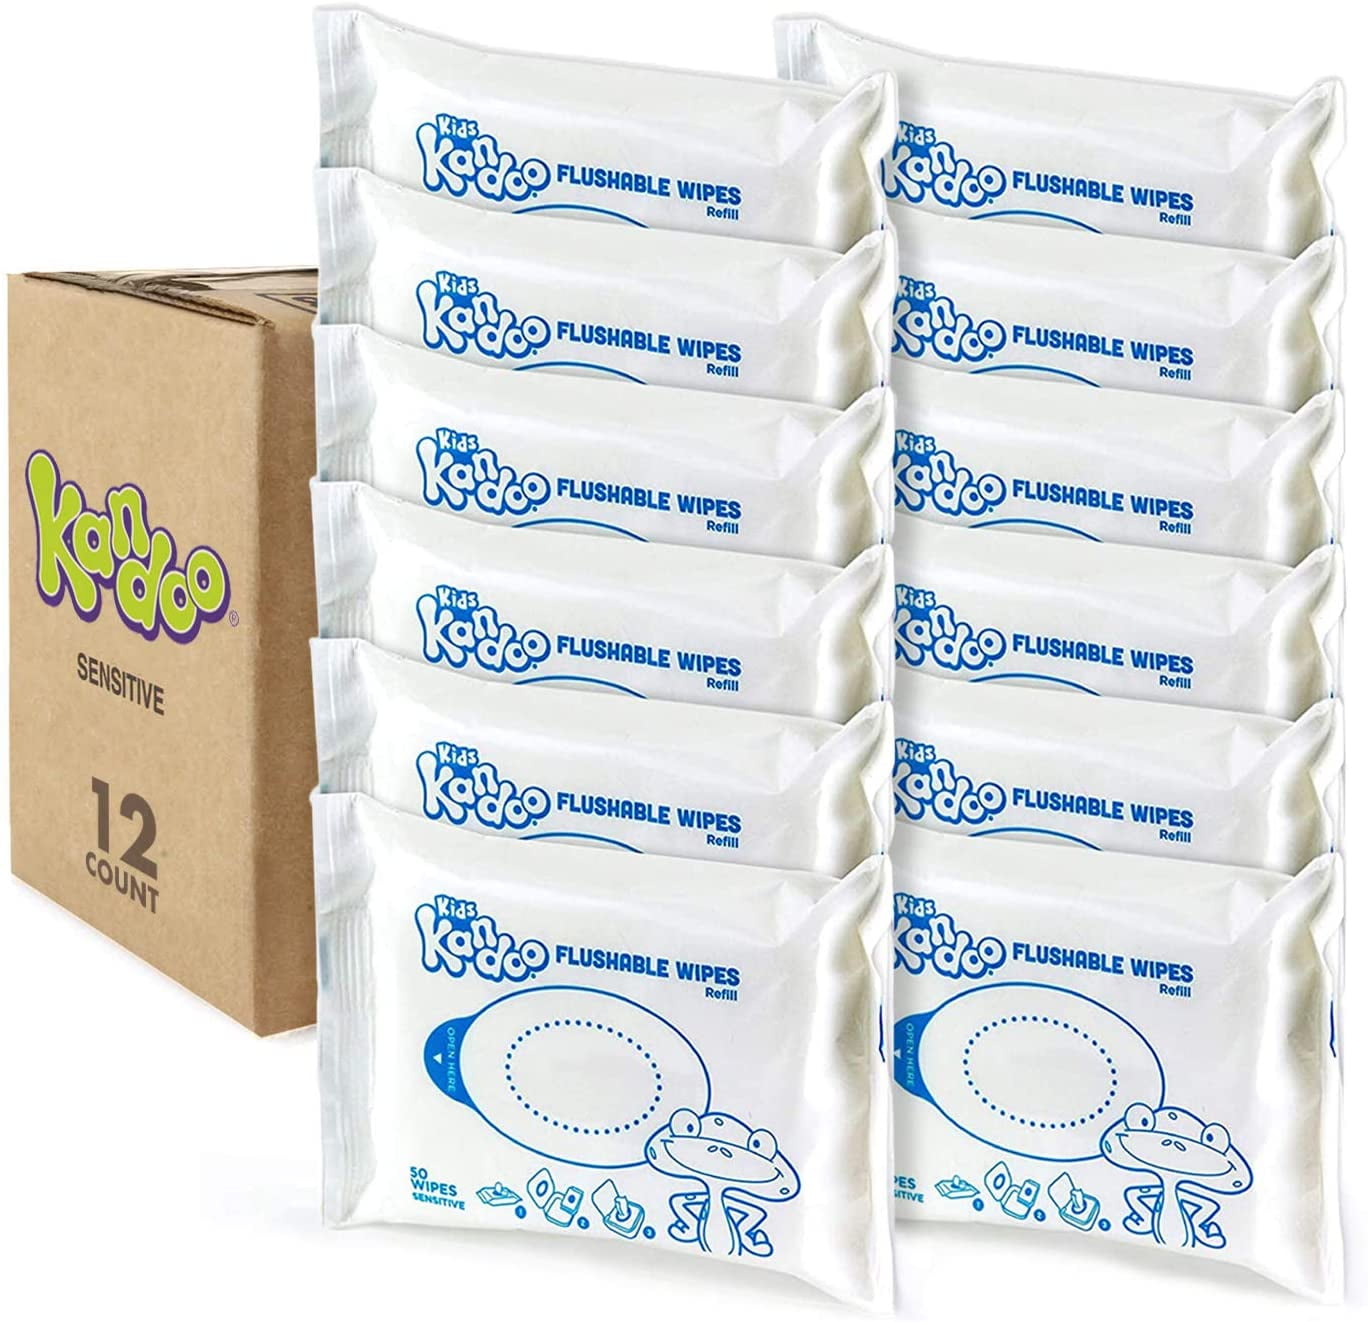 Kandoo Sensitive Flushable Wipes, 50 sheets, 3 count